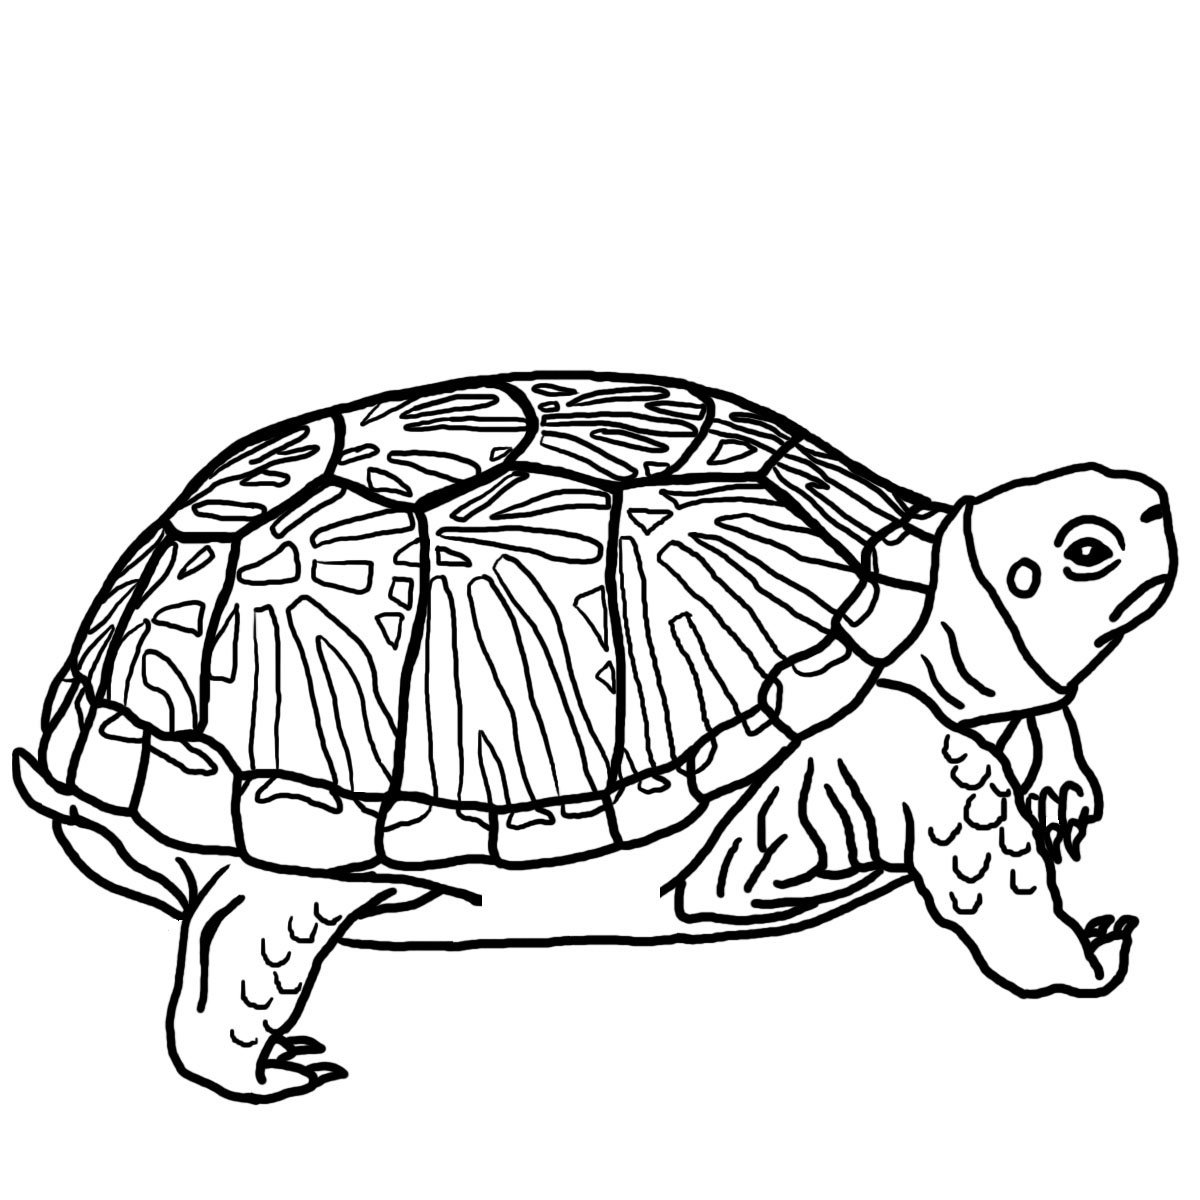 Images For > Sea Turtle Clip Art Black White